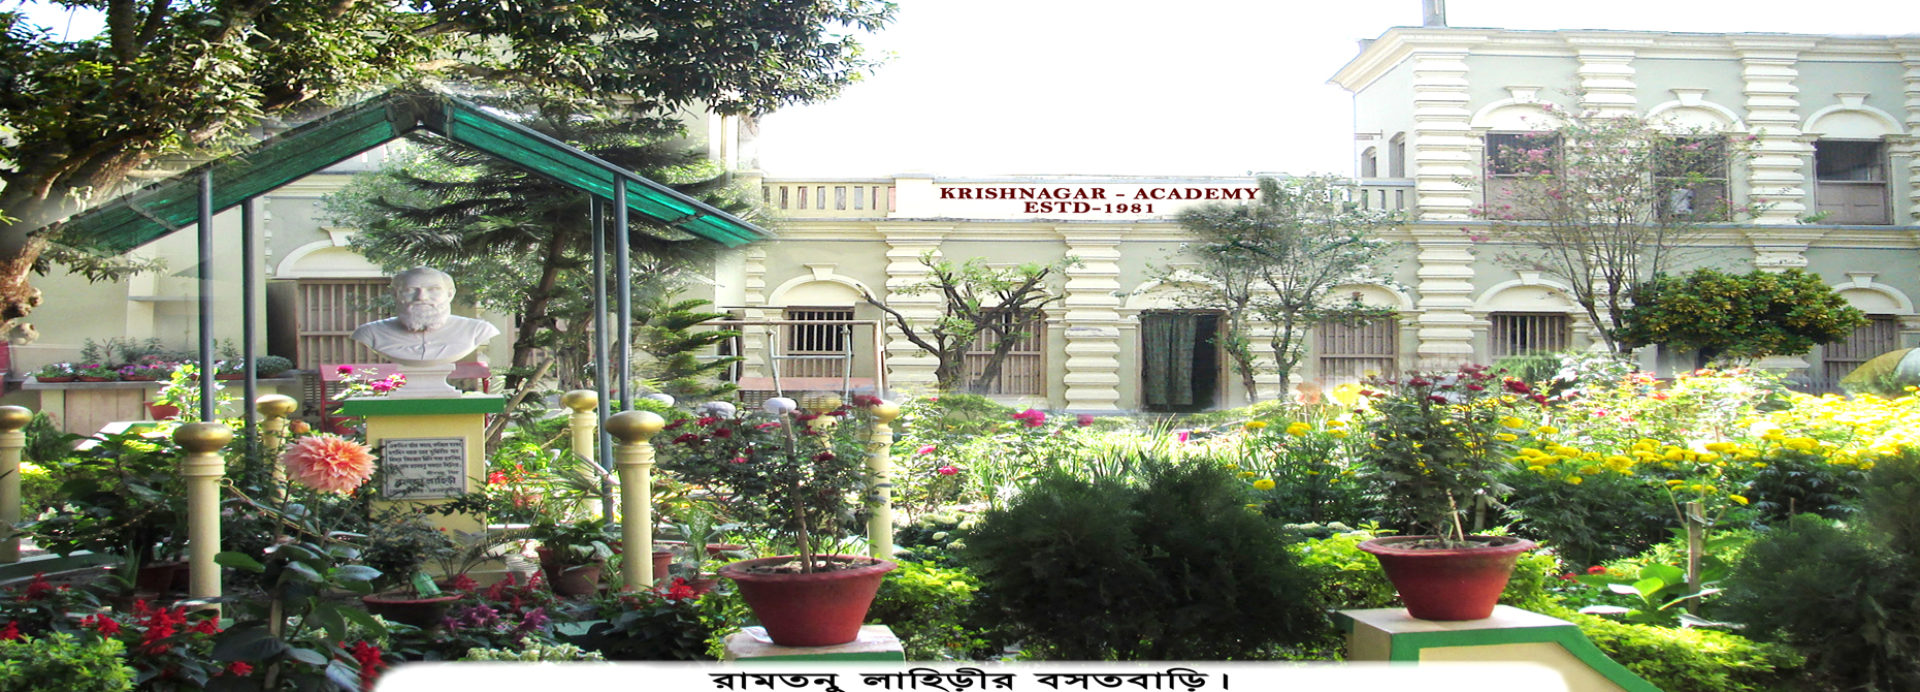 Krishnagar Academy